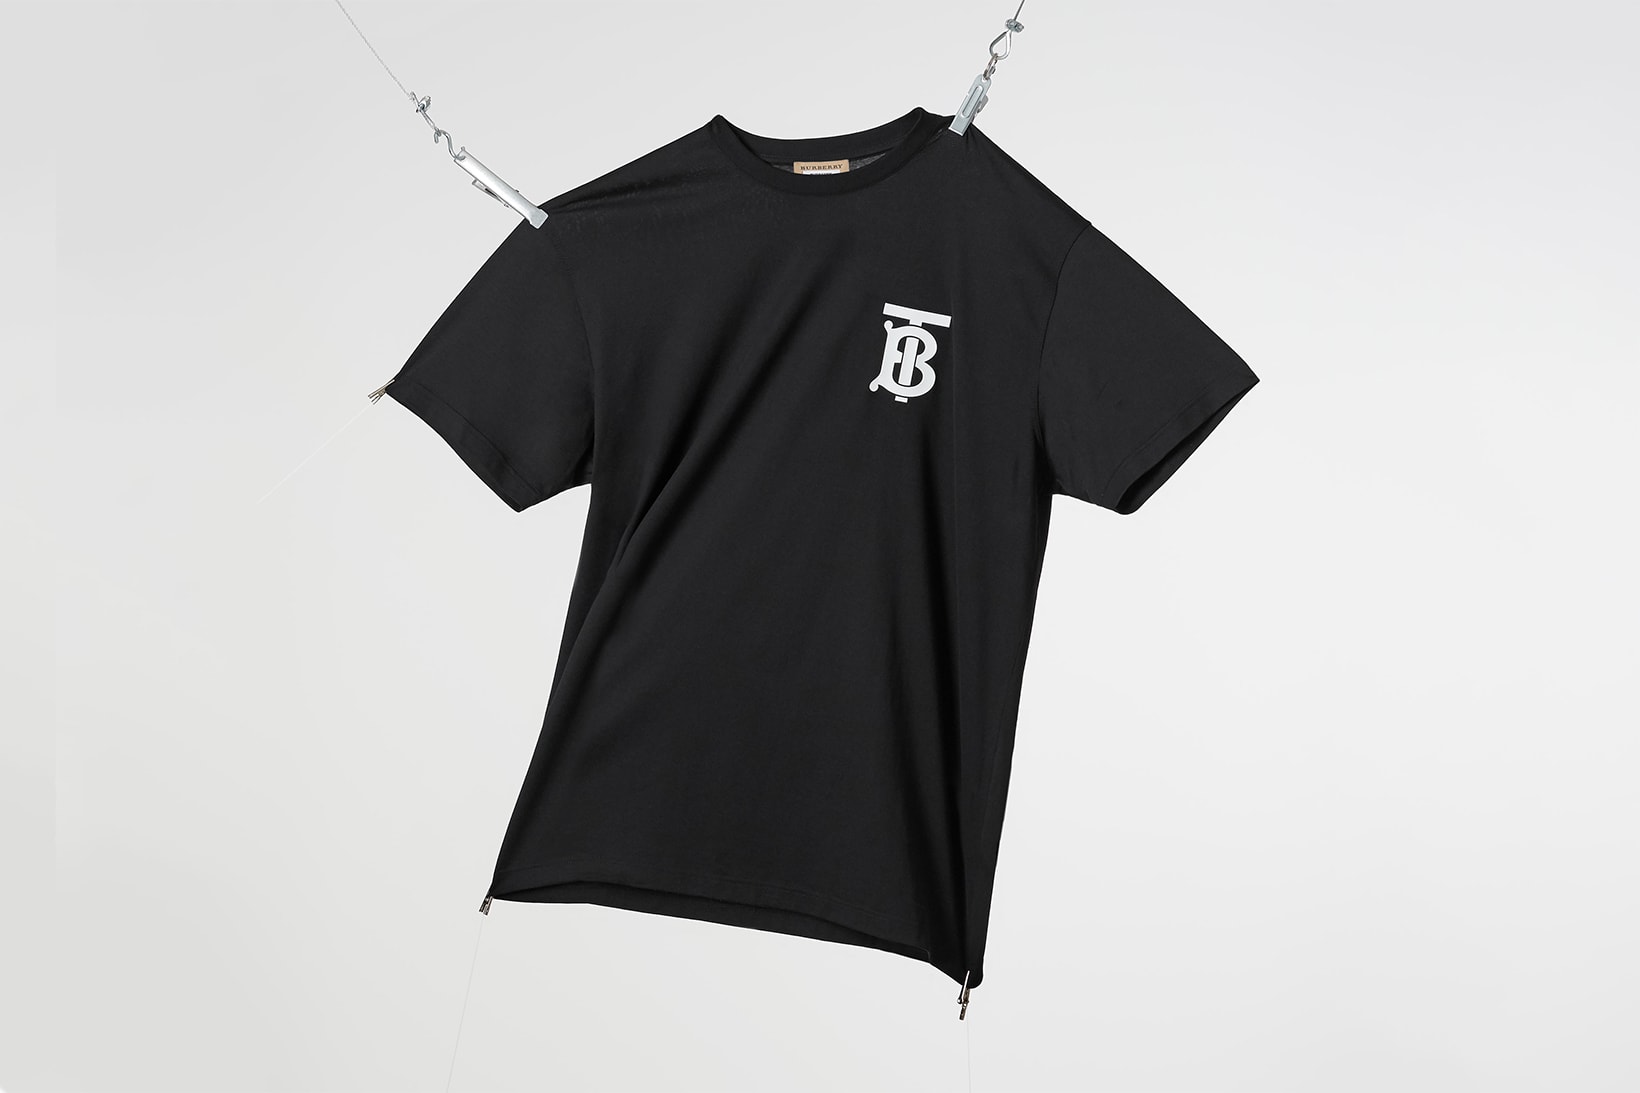 Riccardo Tisci Thomas Burberry Monogram Black T-shirt 2018